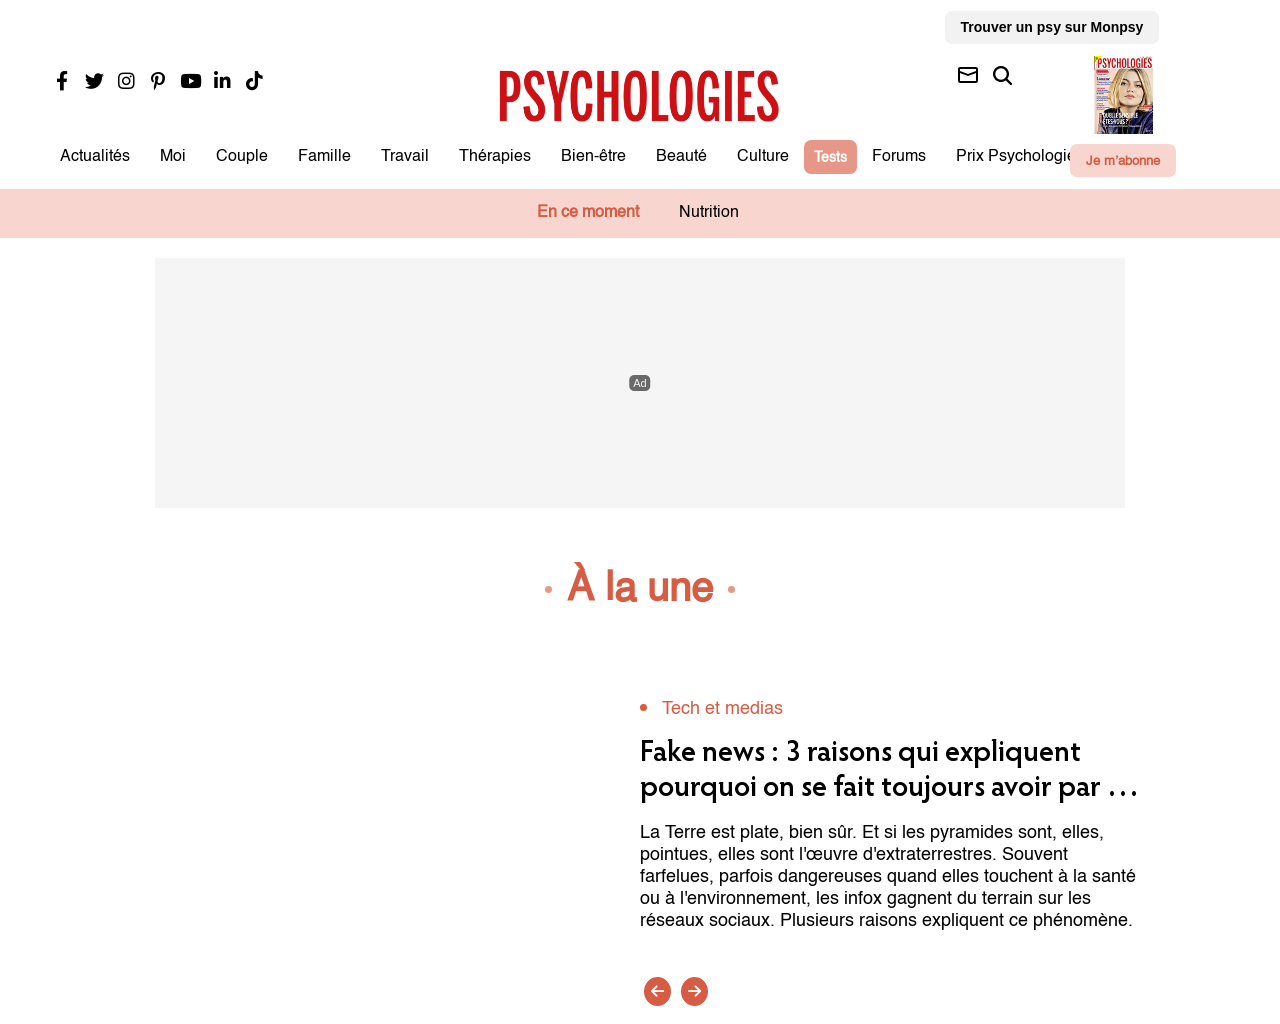 www.psychologies.com